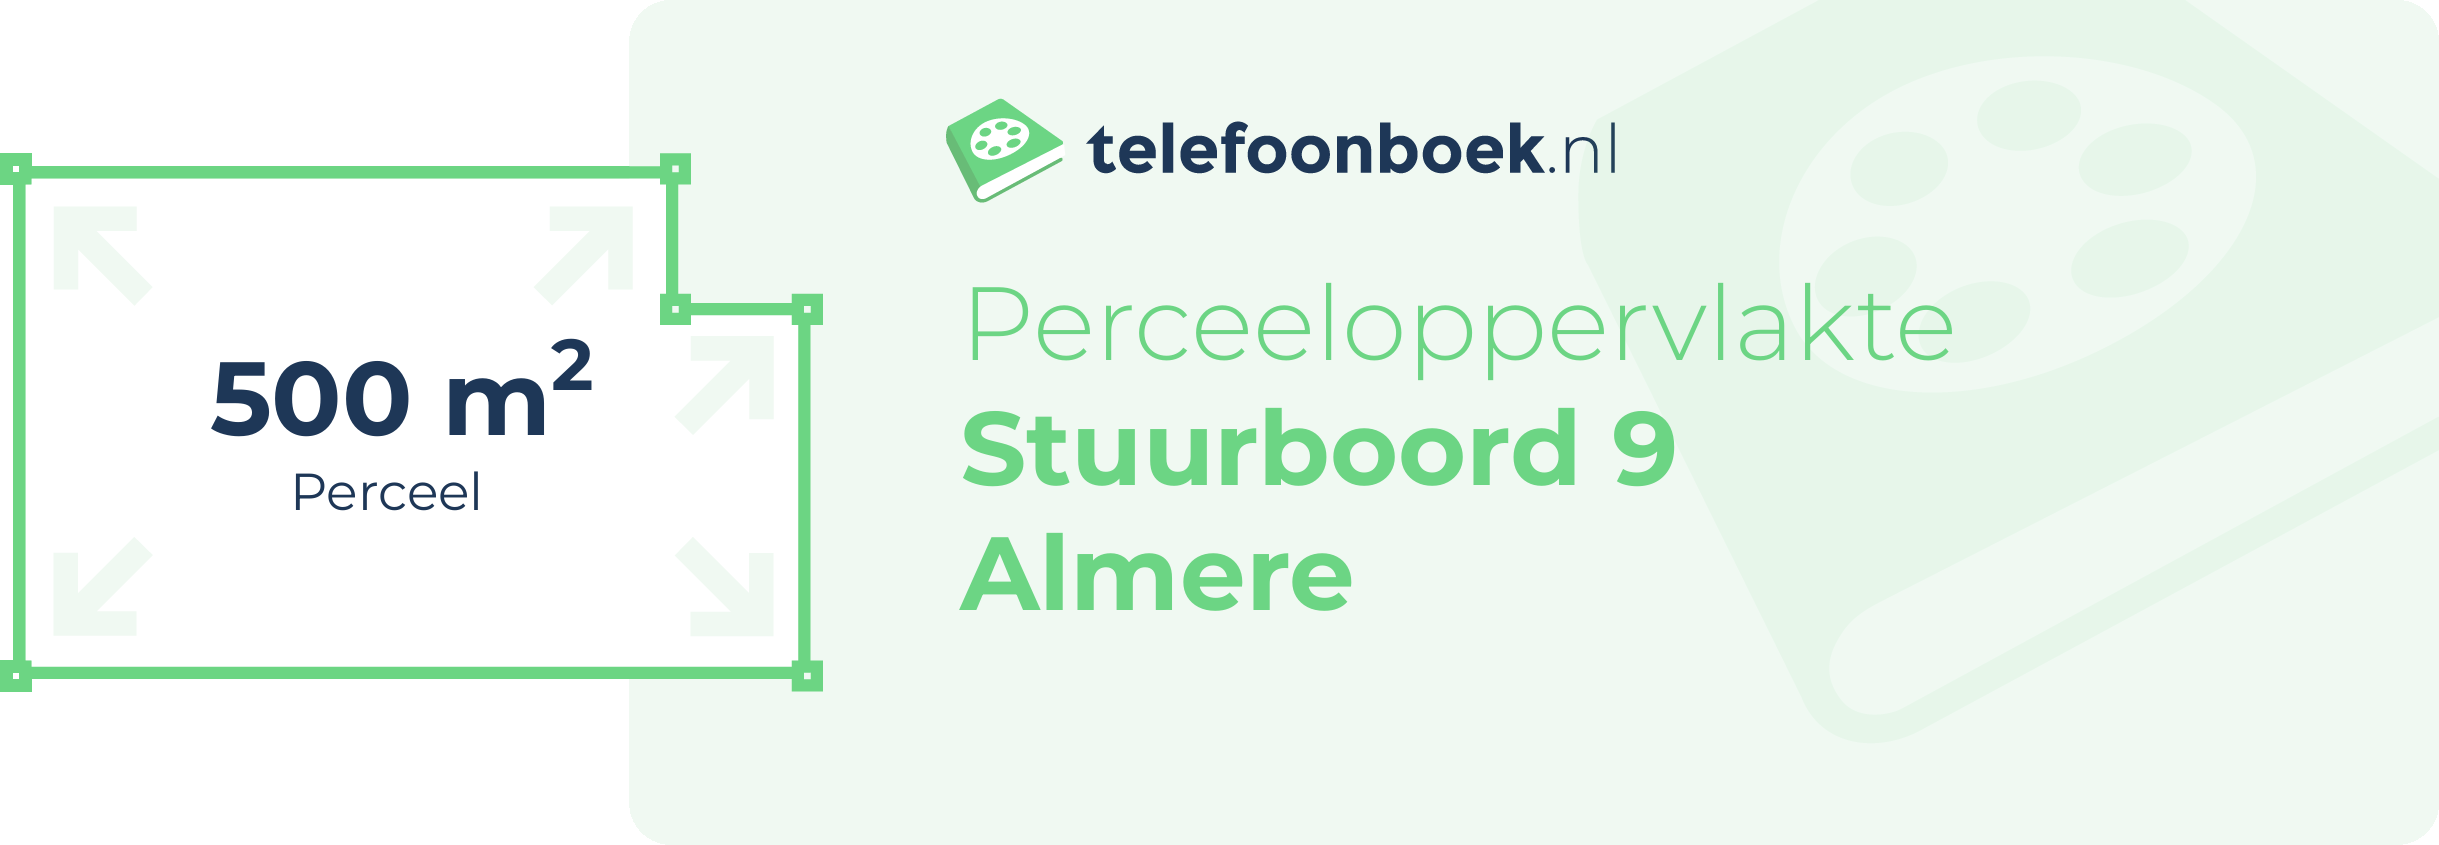 Perceeloppervlakte Stuurboord 9 Almere